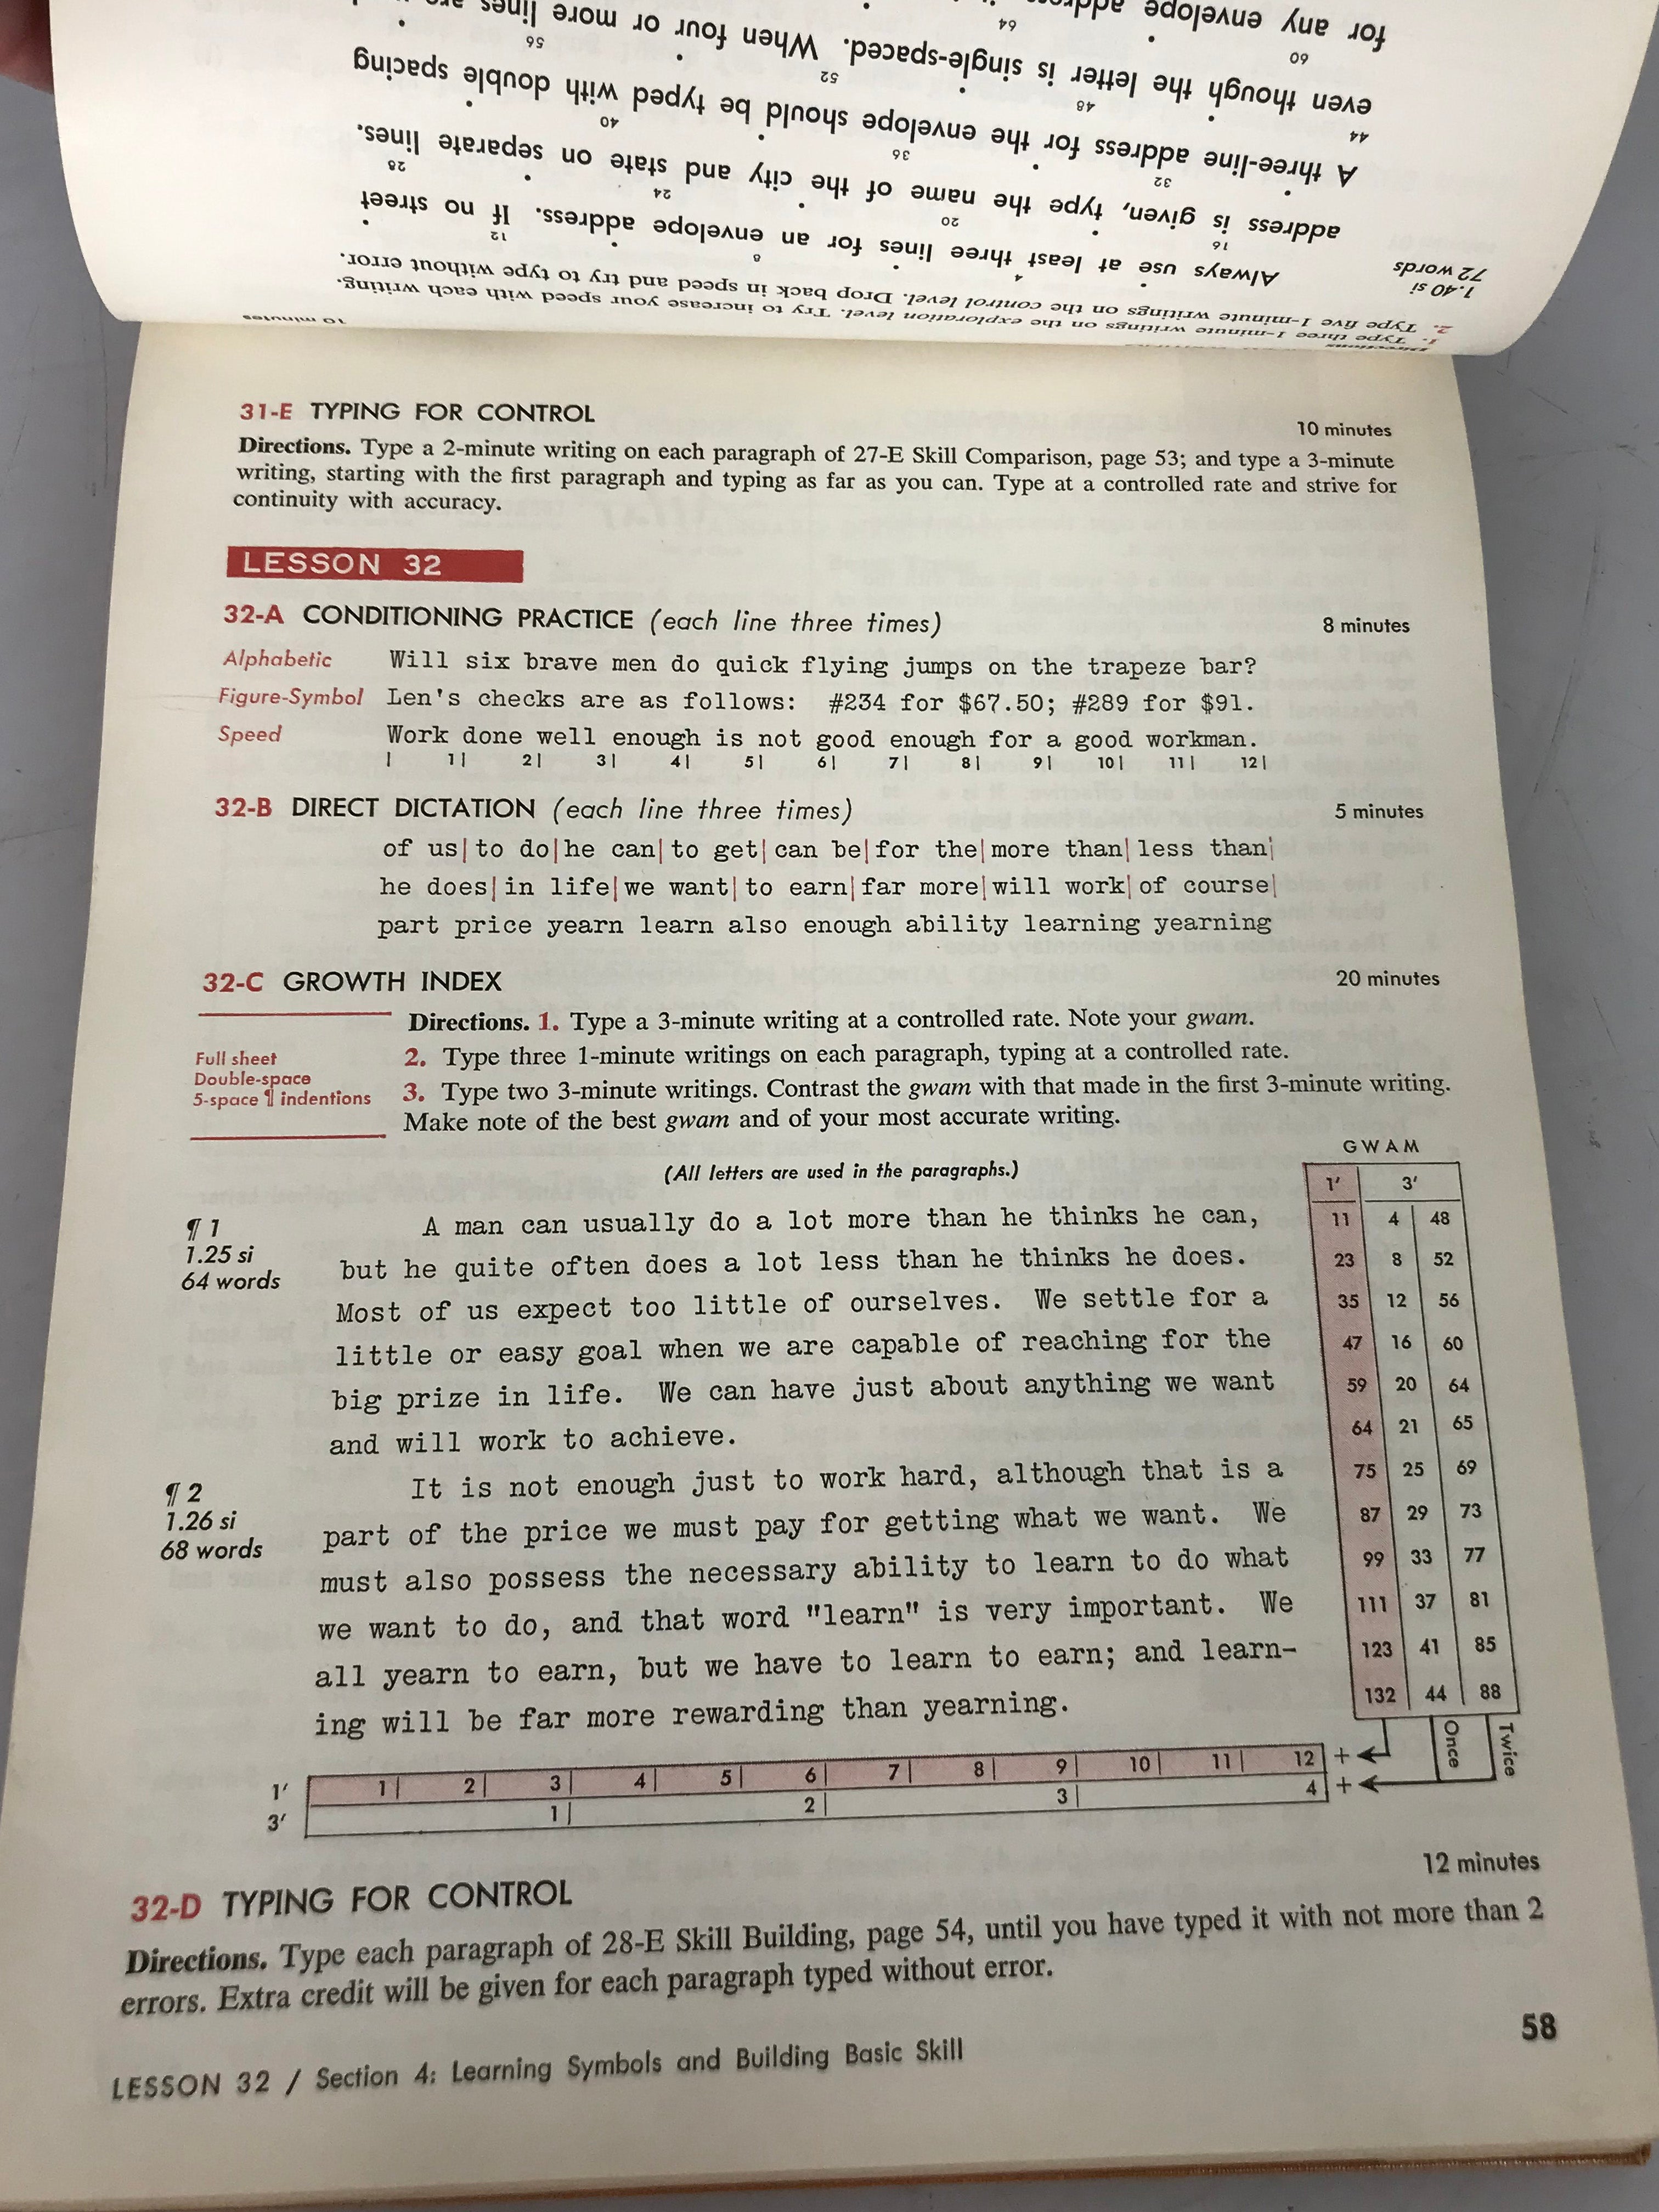 20th Century Typewriting 8th Edition 1962